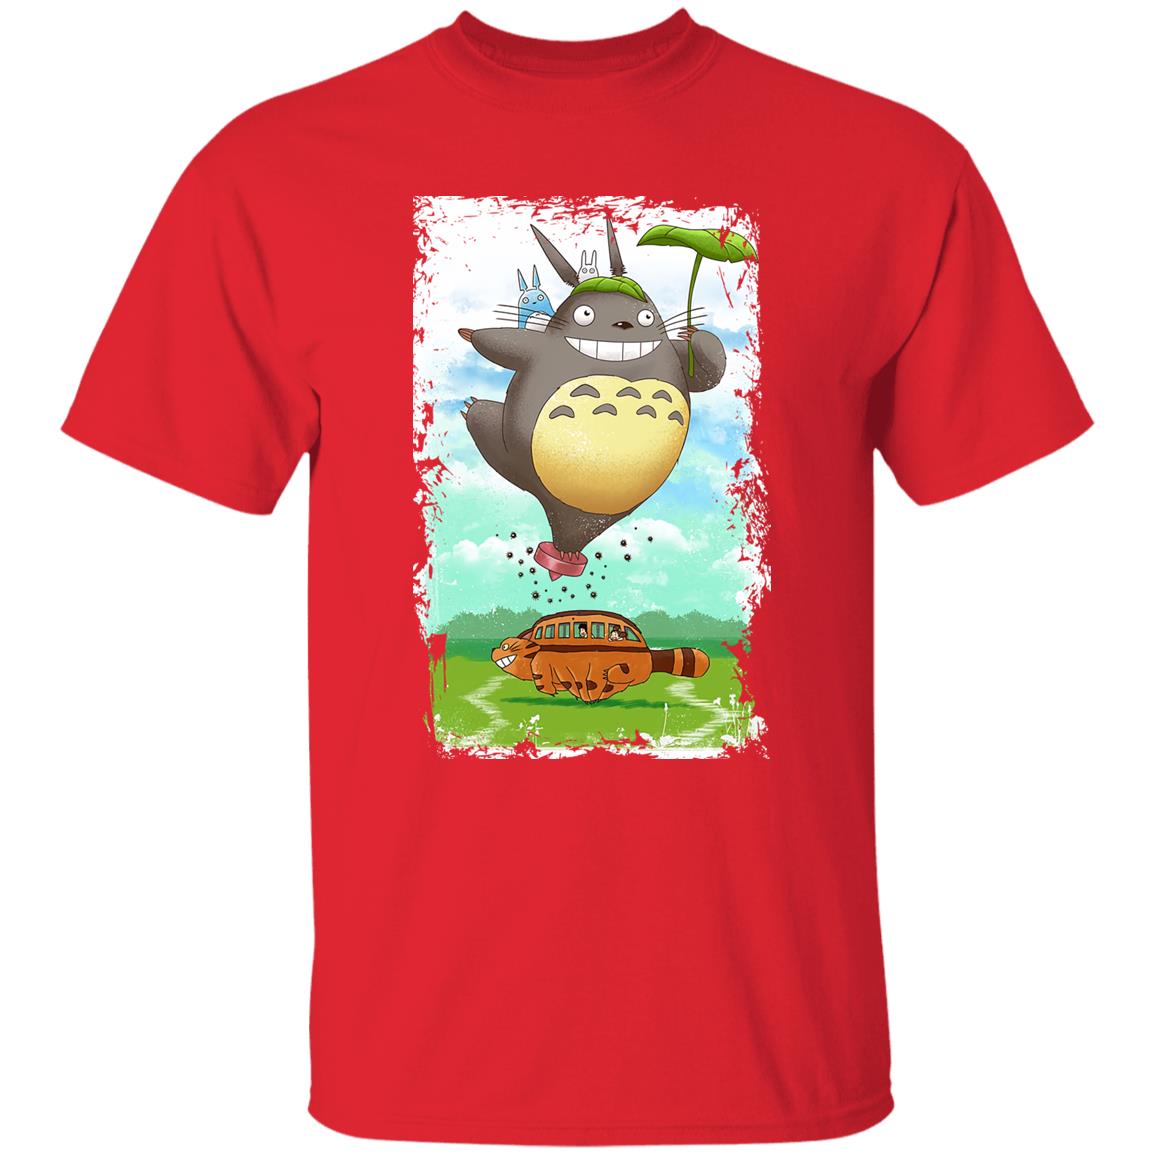 Totoro the Funny Neighbor T Shirt